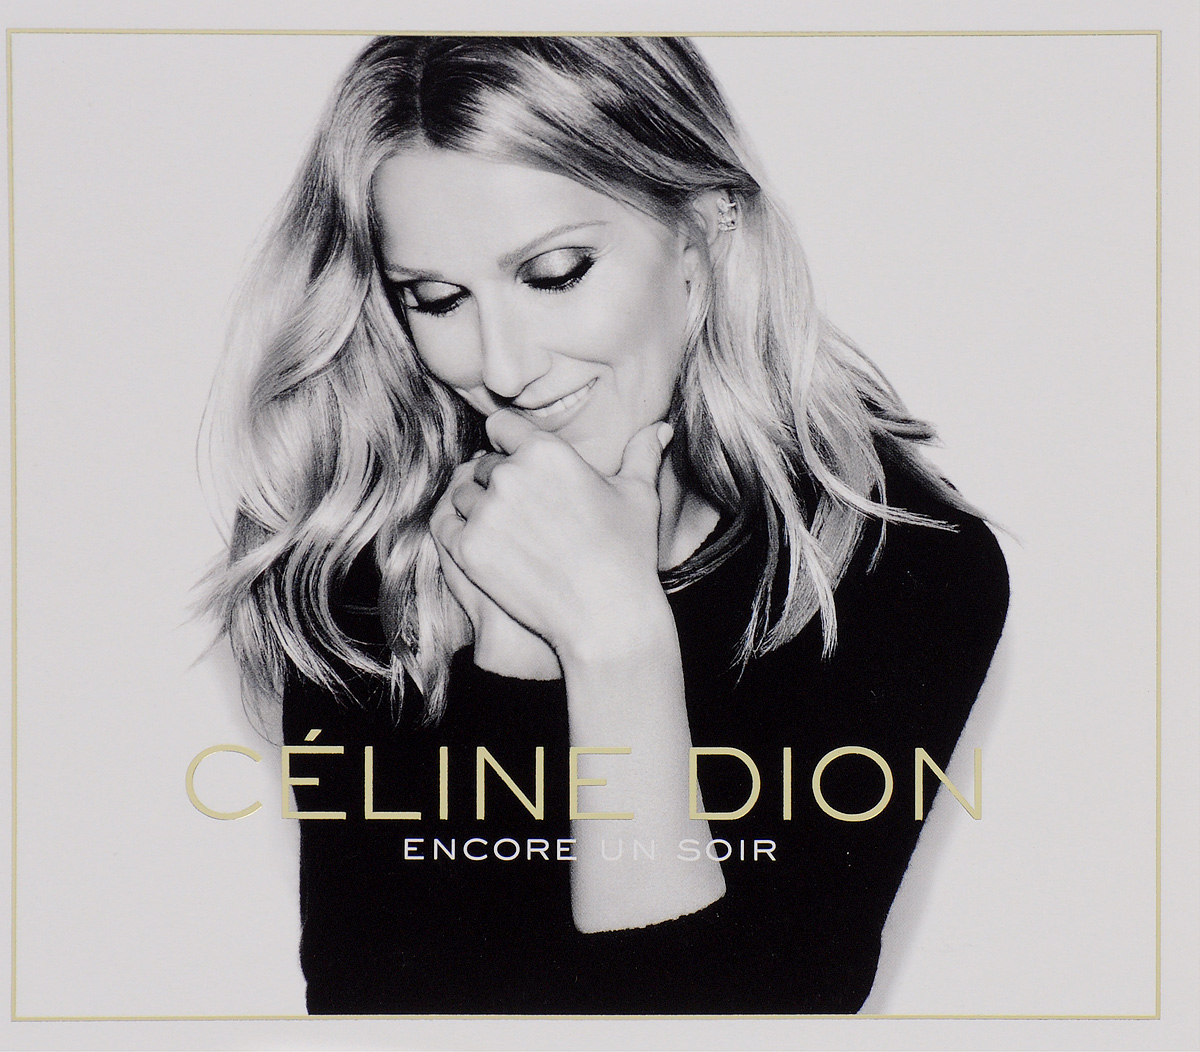 Селин Дион Celine Dion. Encore Un Soir